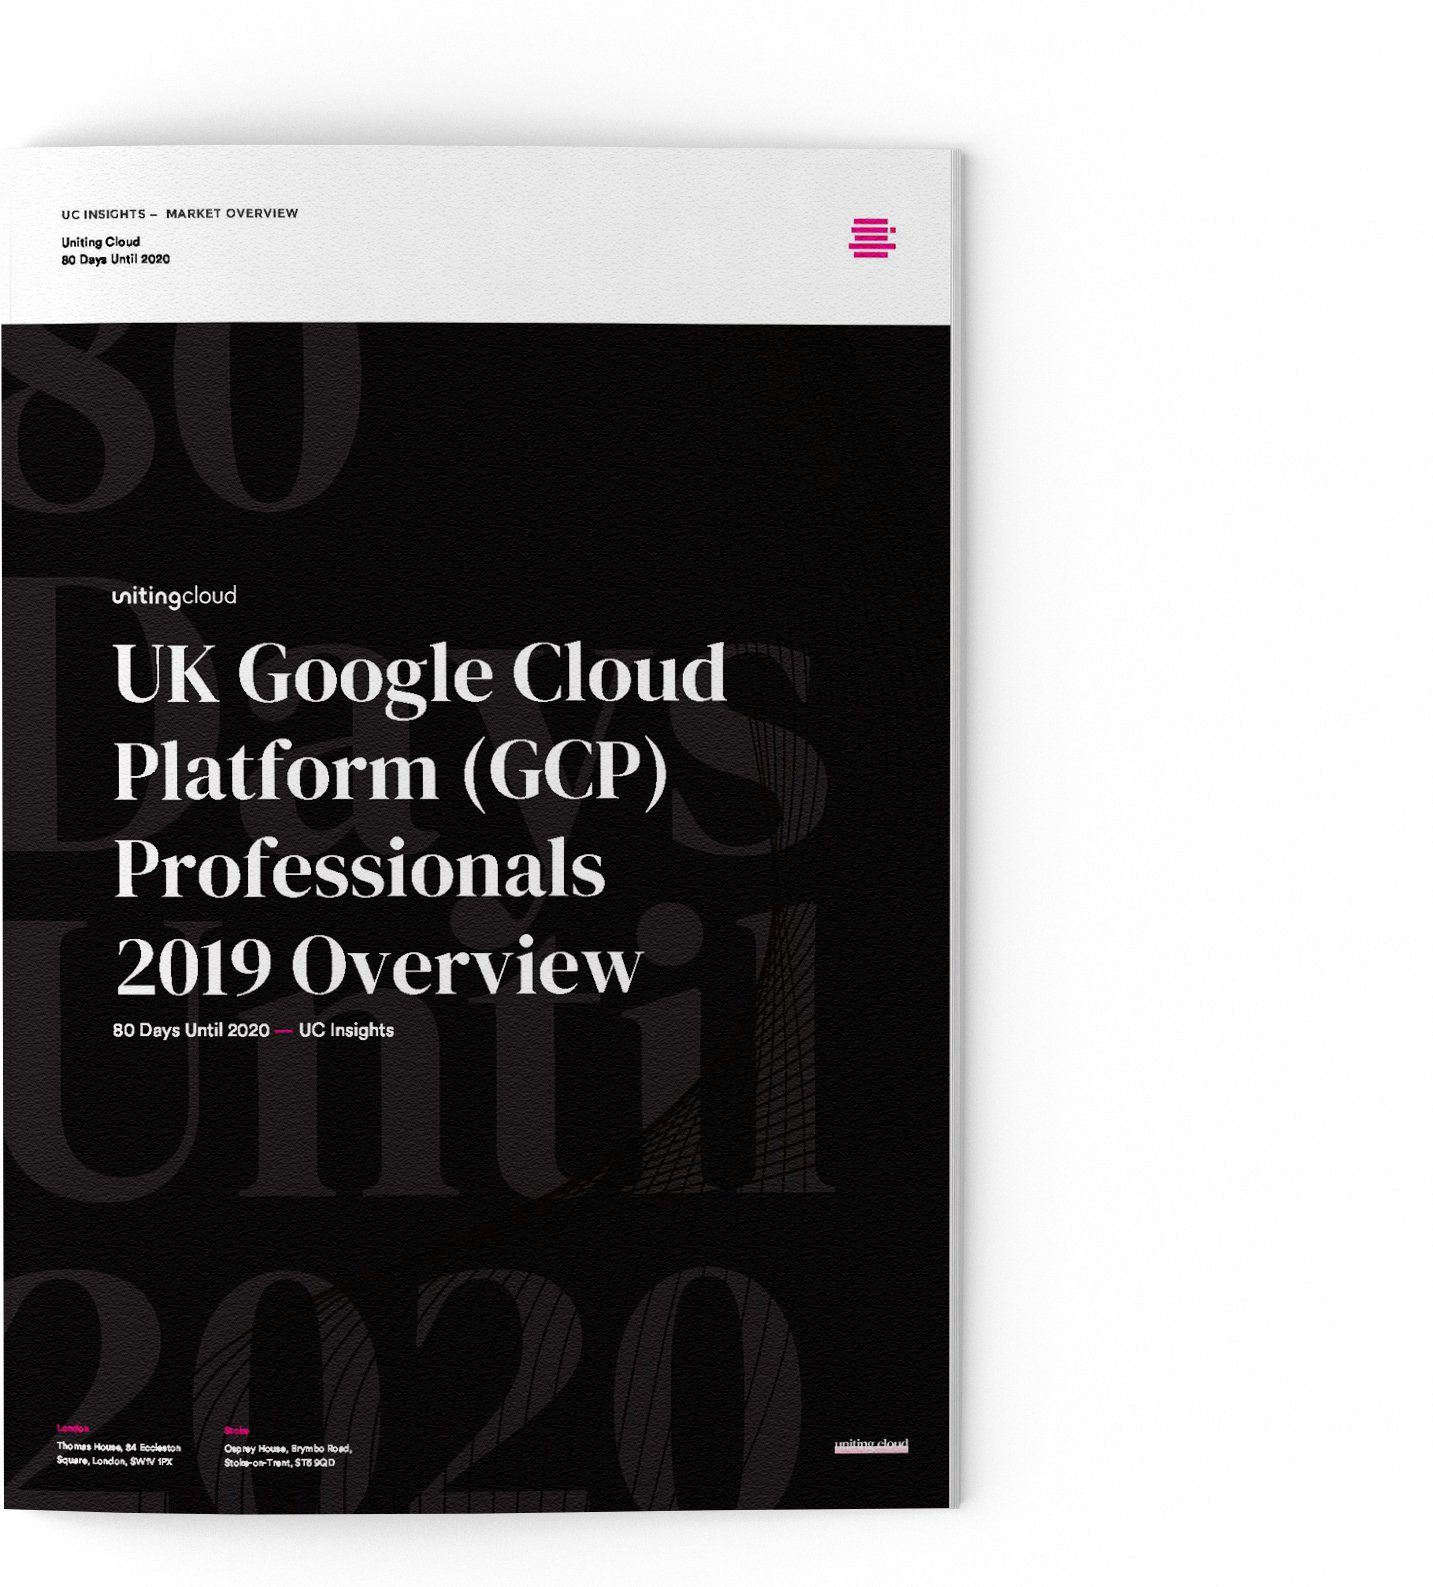 UK Google Cloud Platform Report Image